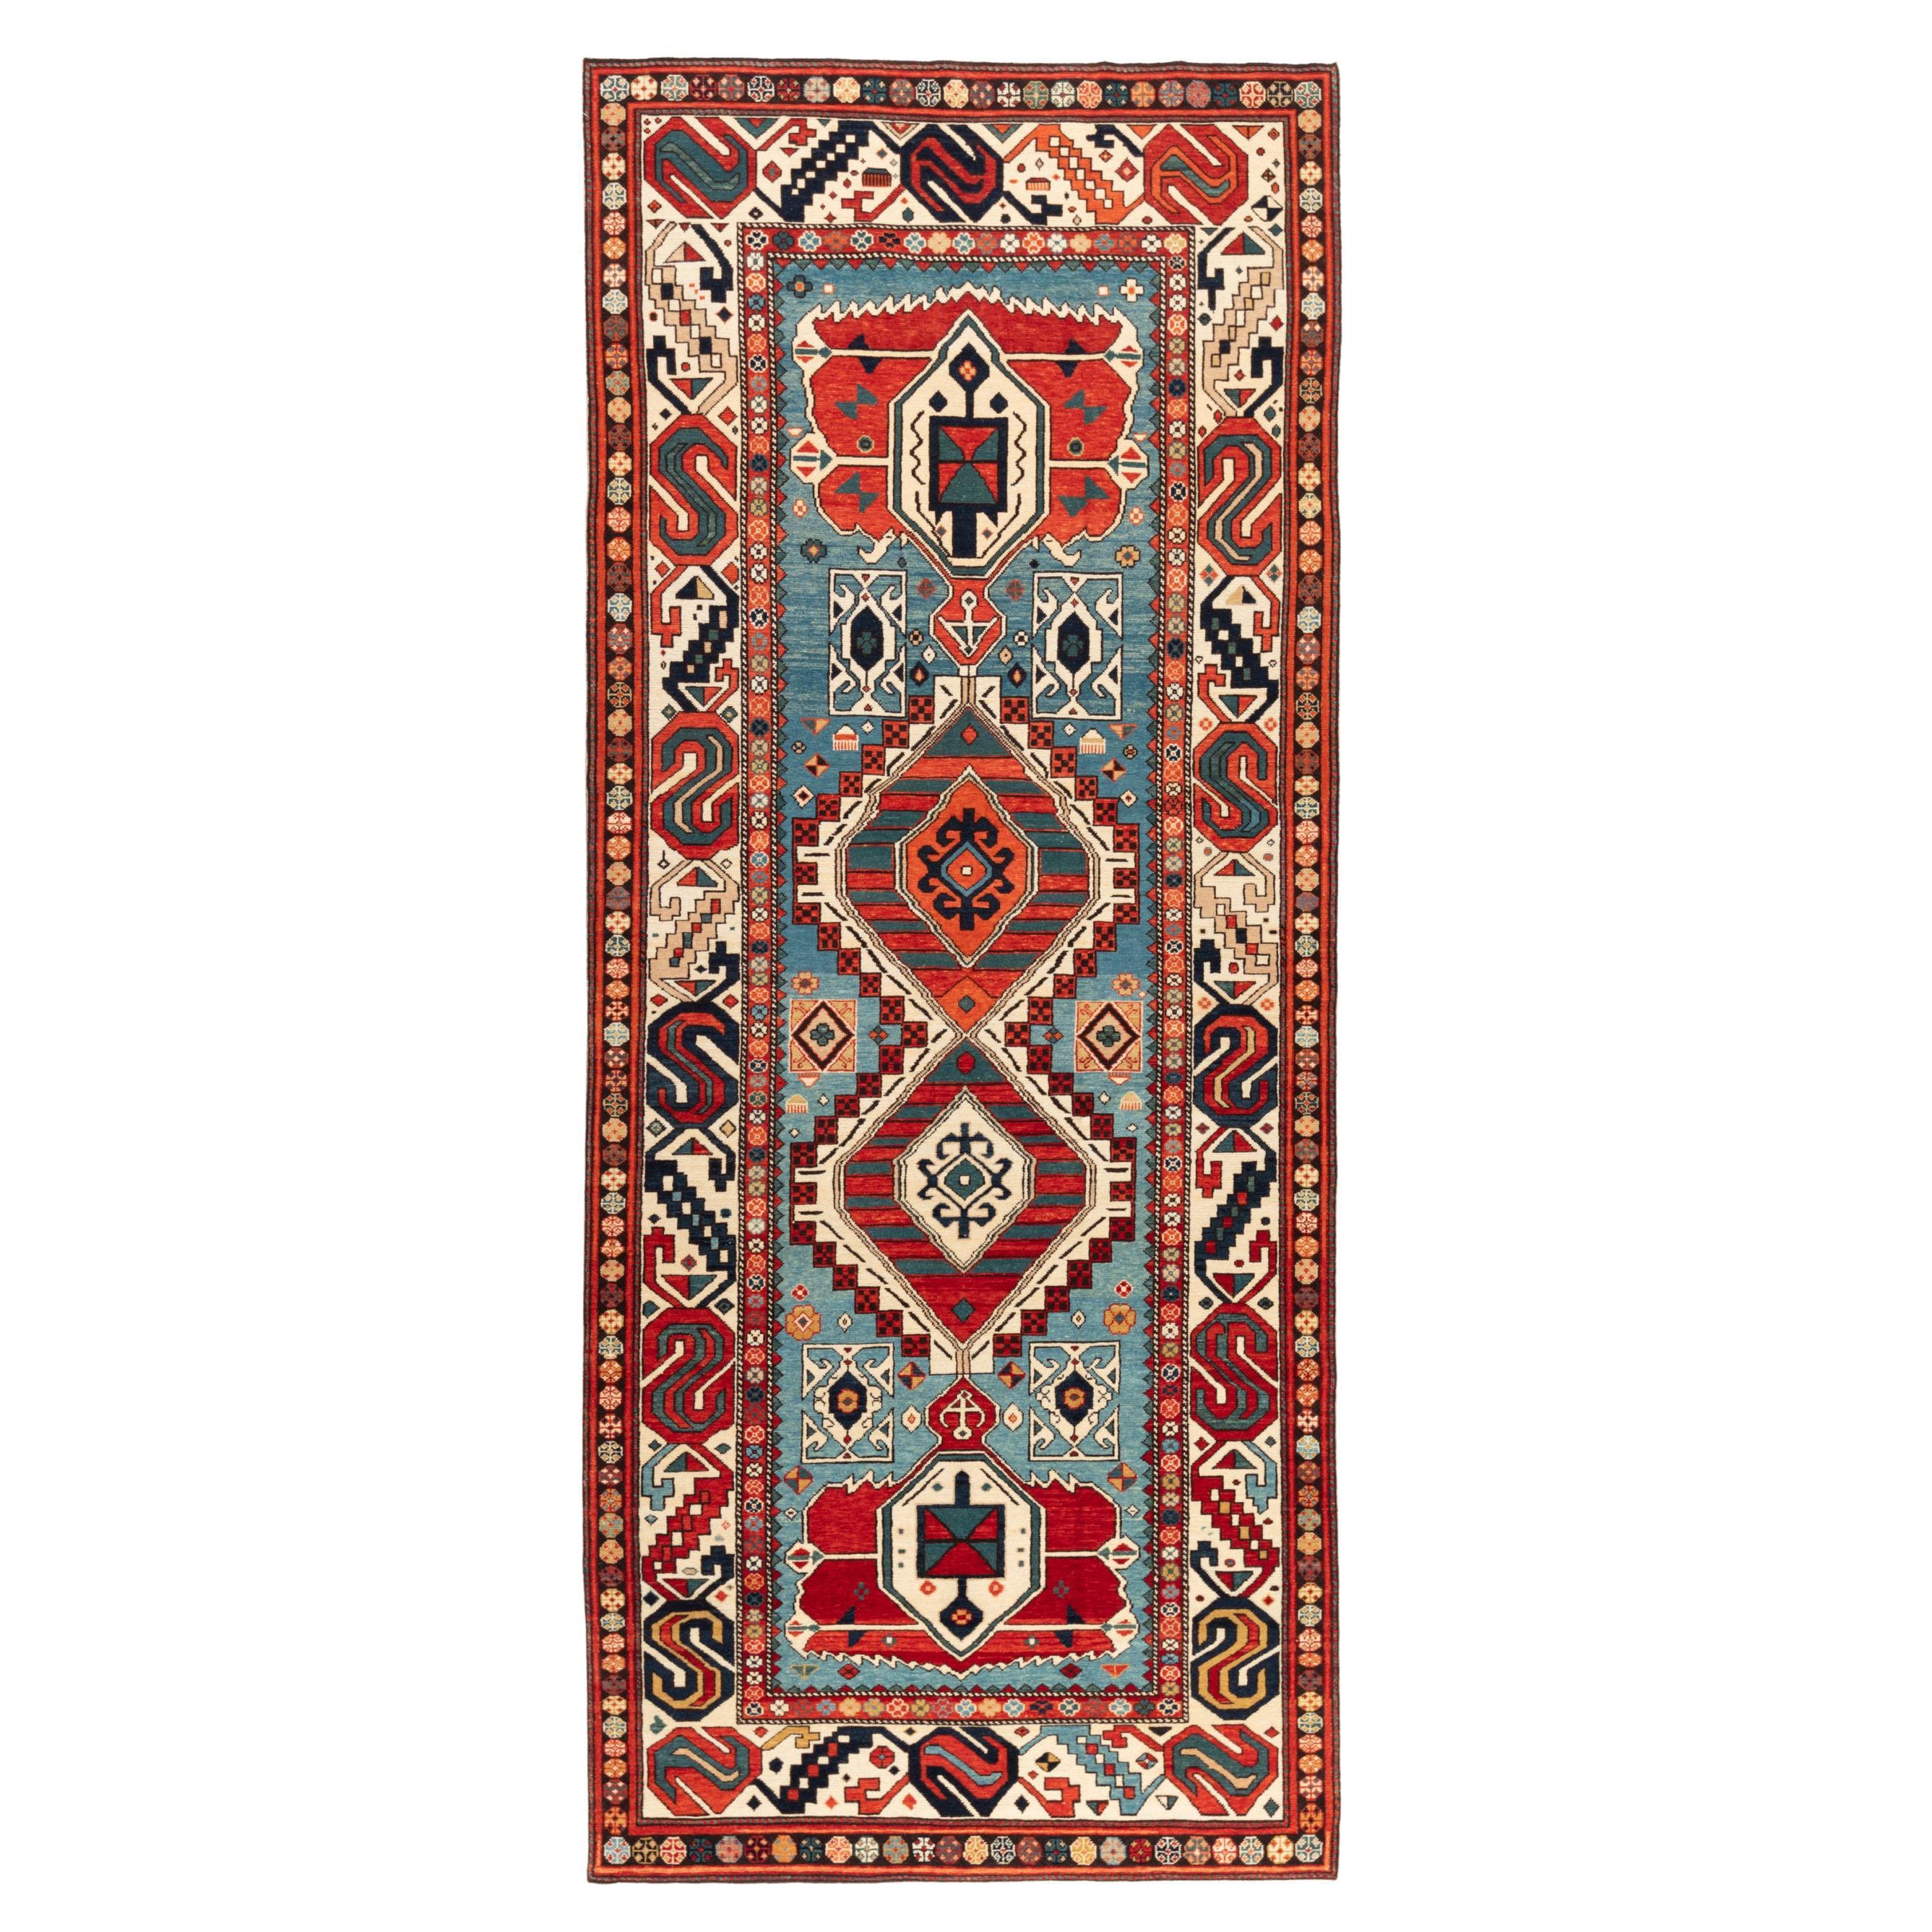 Ararat Rugs Shirvan Rug with Hexagon Columns Caucasia Revival Carpet Natural Dye